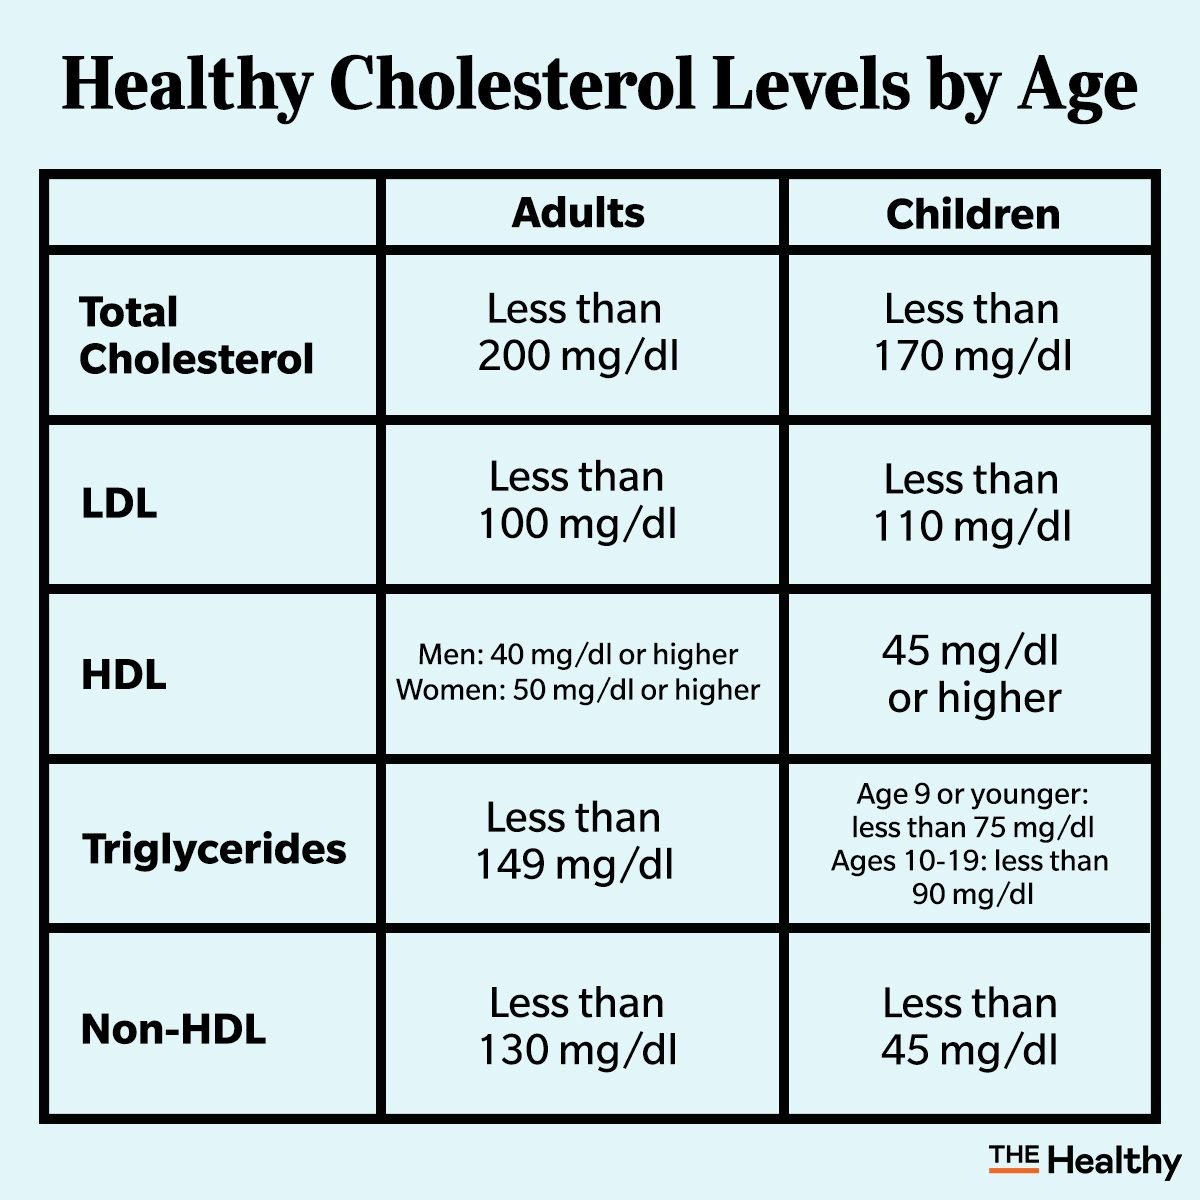 Healthier cholesterol levels